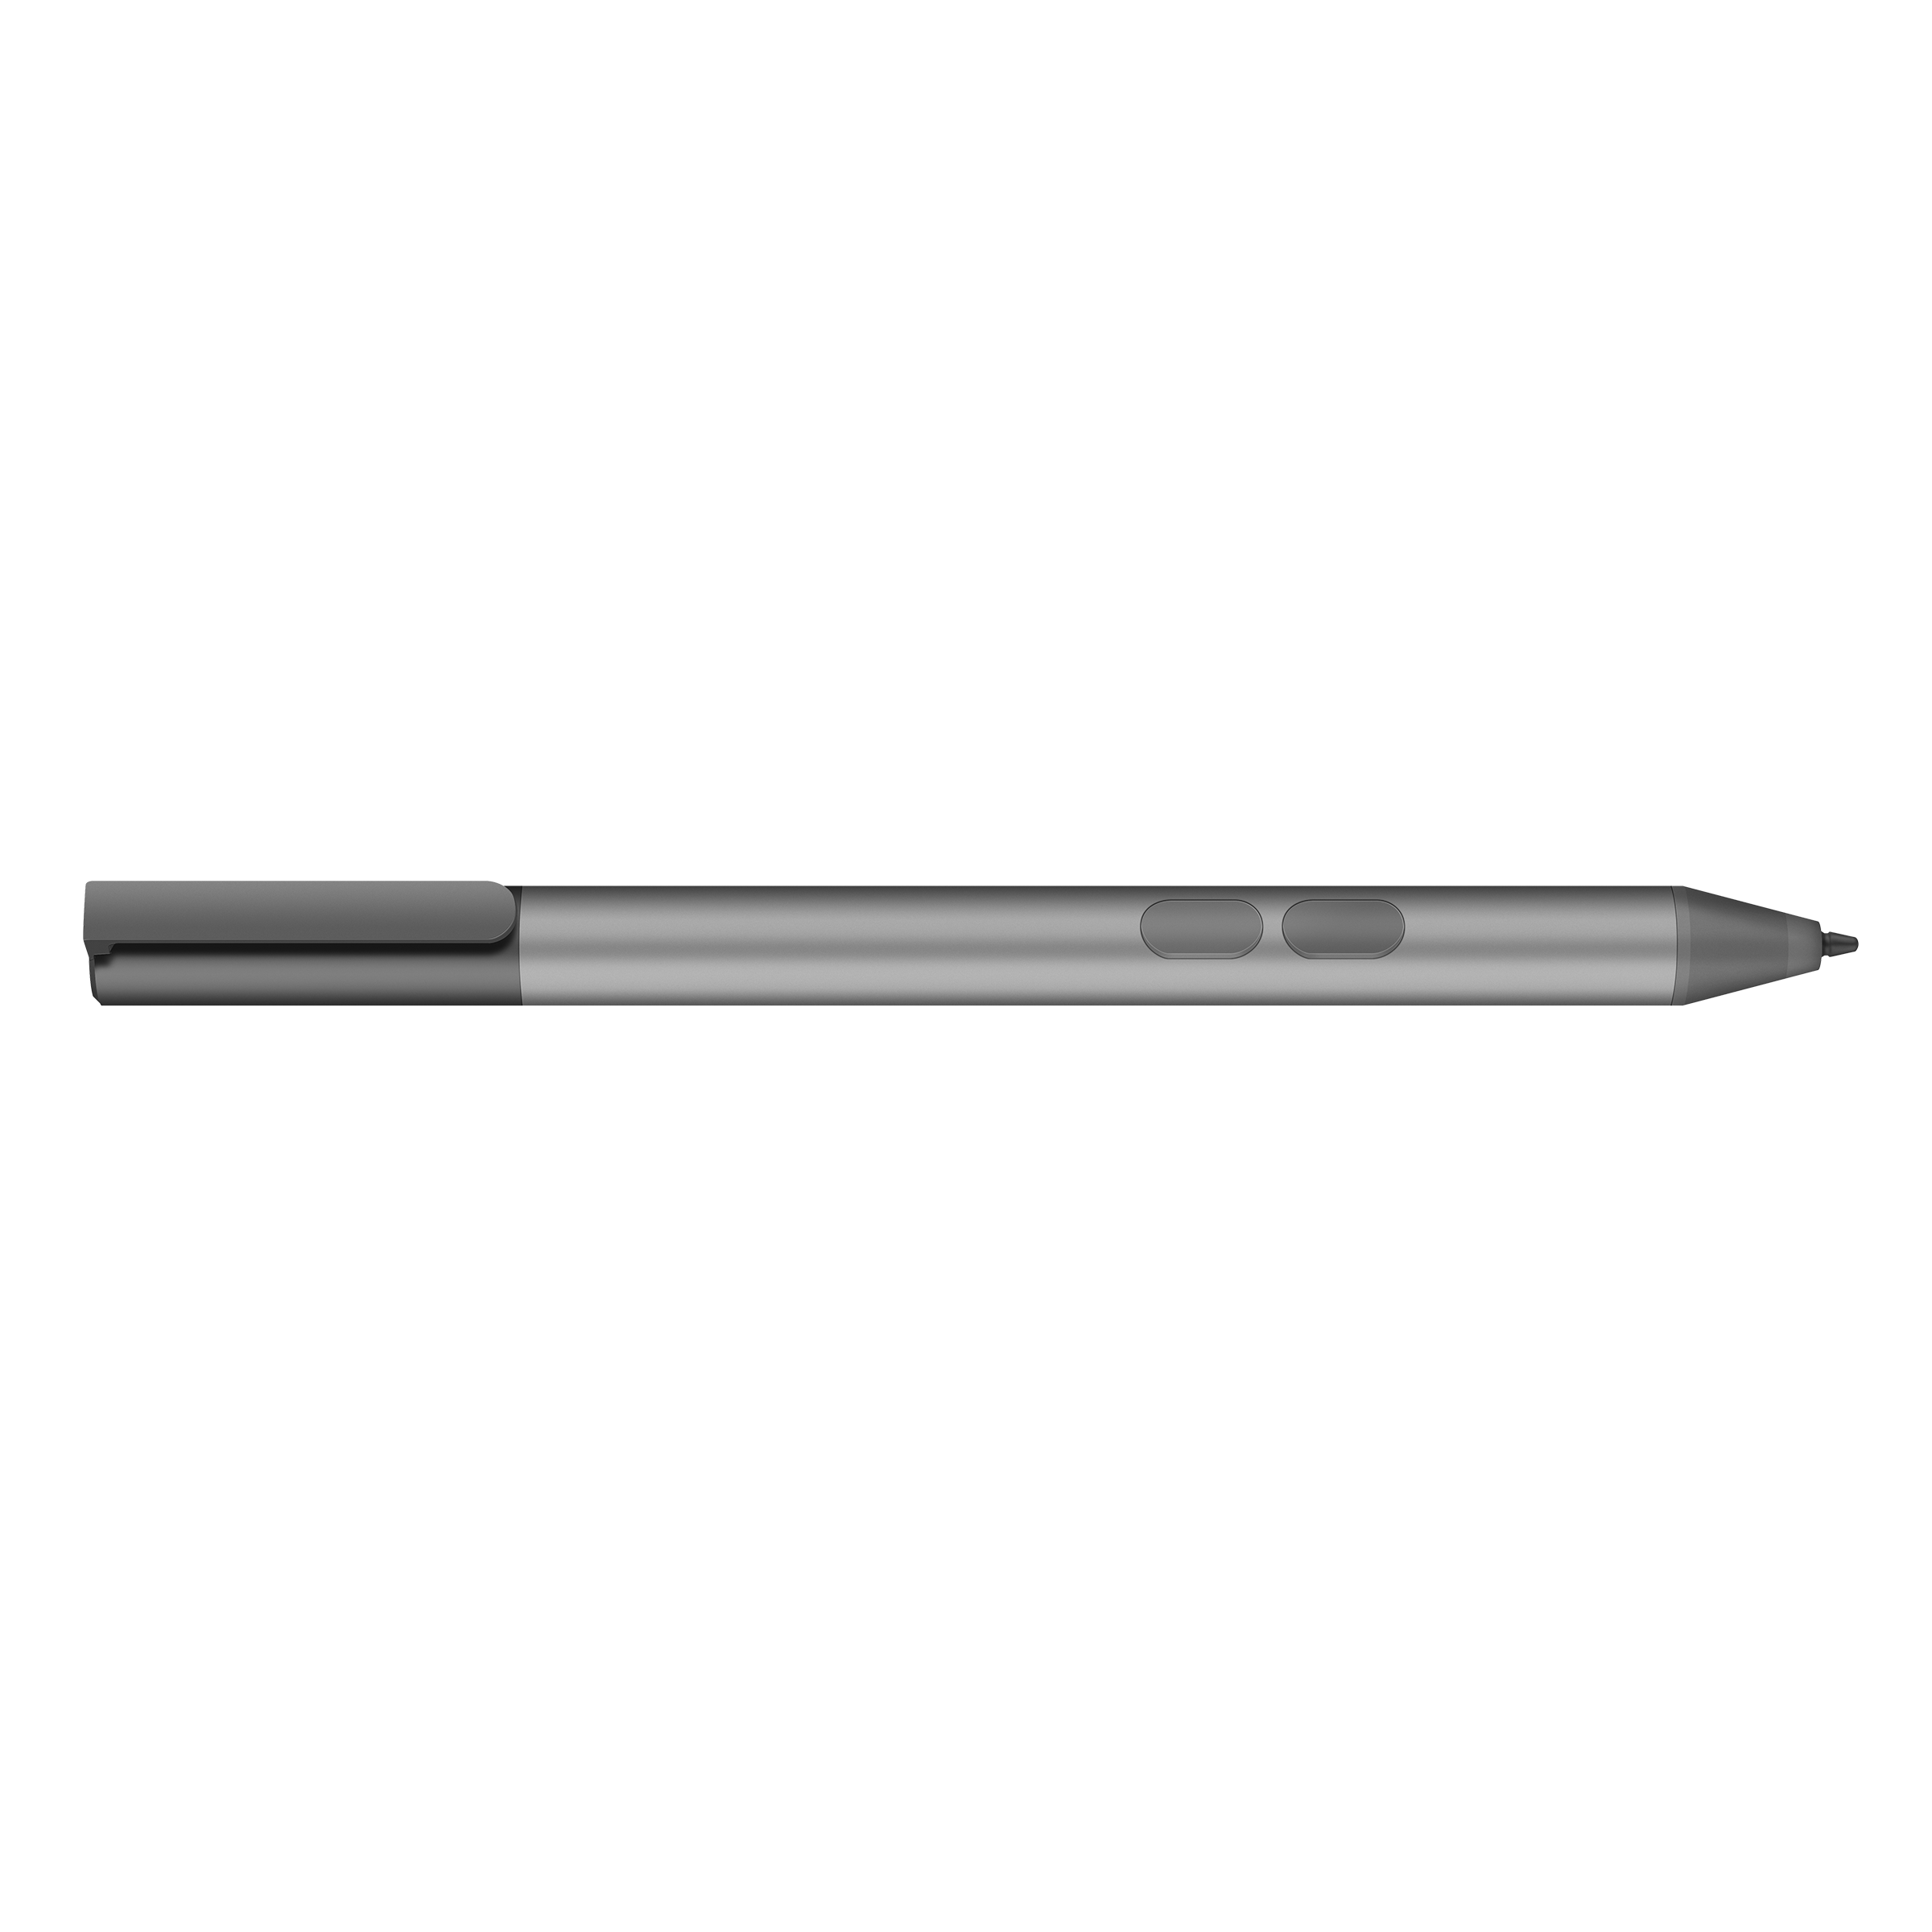 Metallic Silver Super Precise Stylus Pen for ASUS VivoBook Flip 12 TP203NA Stylus Pen by BoxWave Stylus Pen for ASUS VivoBook Flip 12 TP203NA - FineTouch Capacitive Stylus 